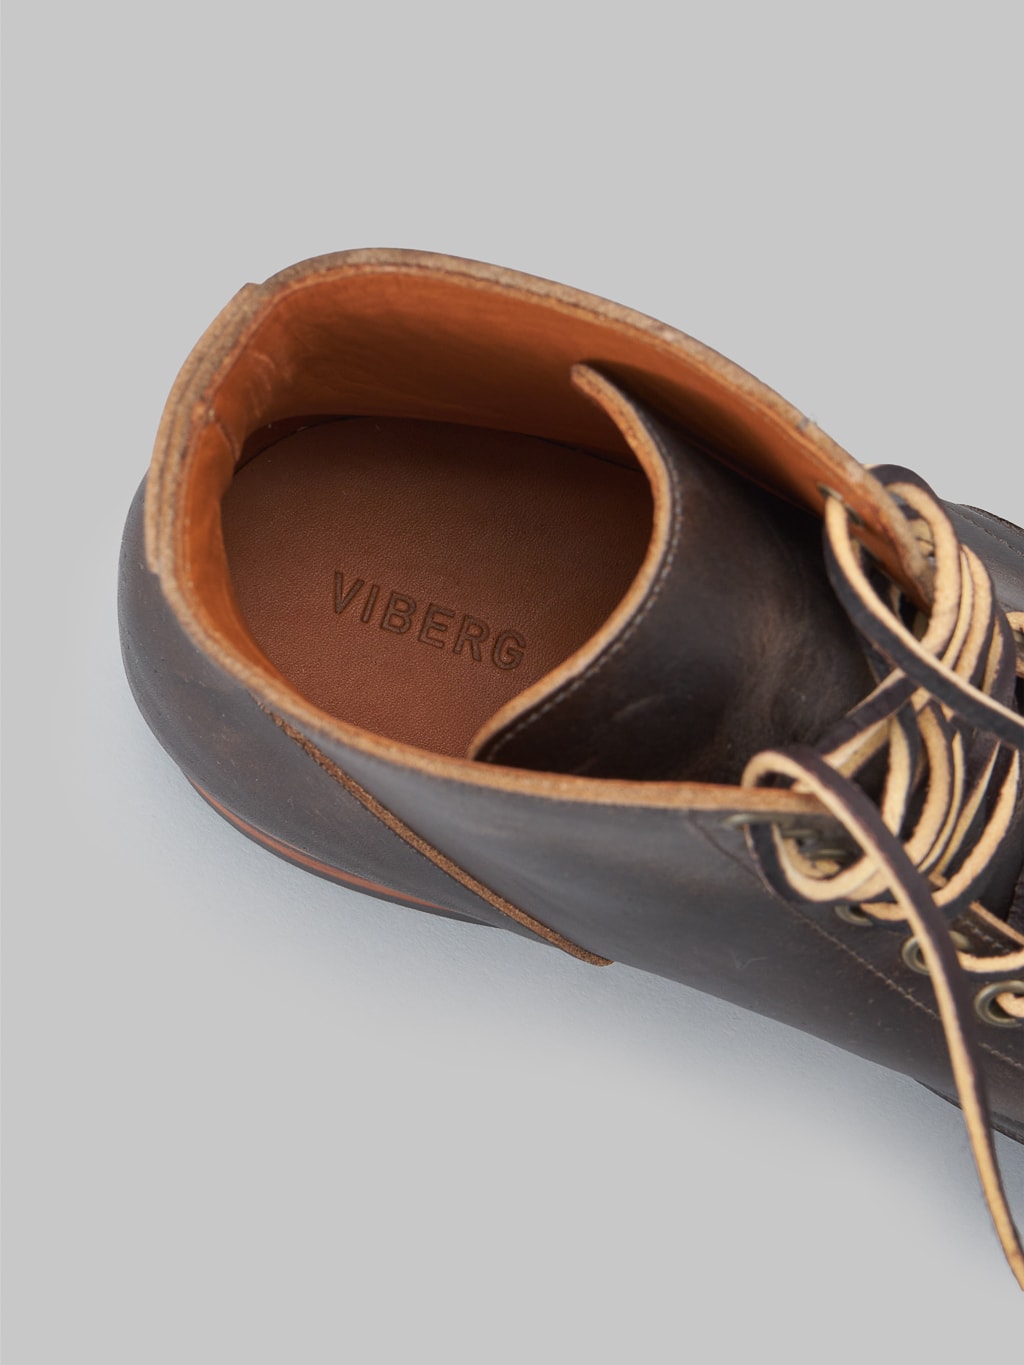 viberg service boot 2023 bct antique phoenix dark brown leather interior